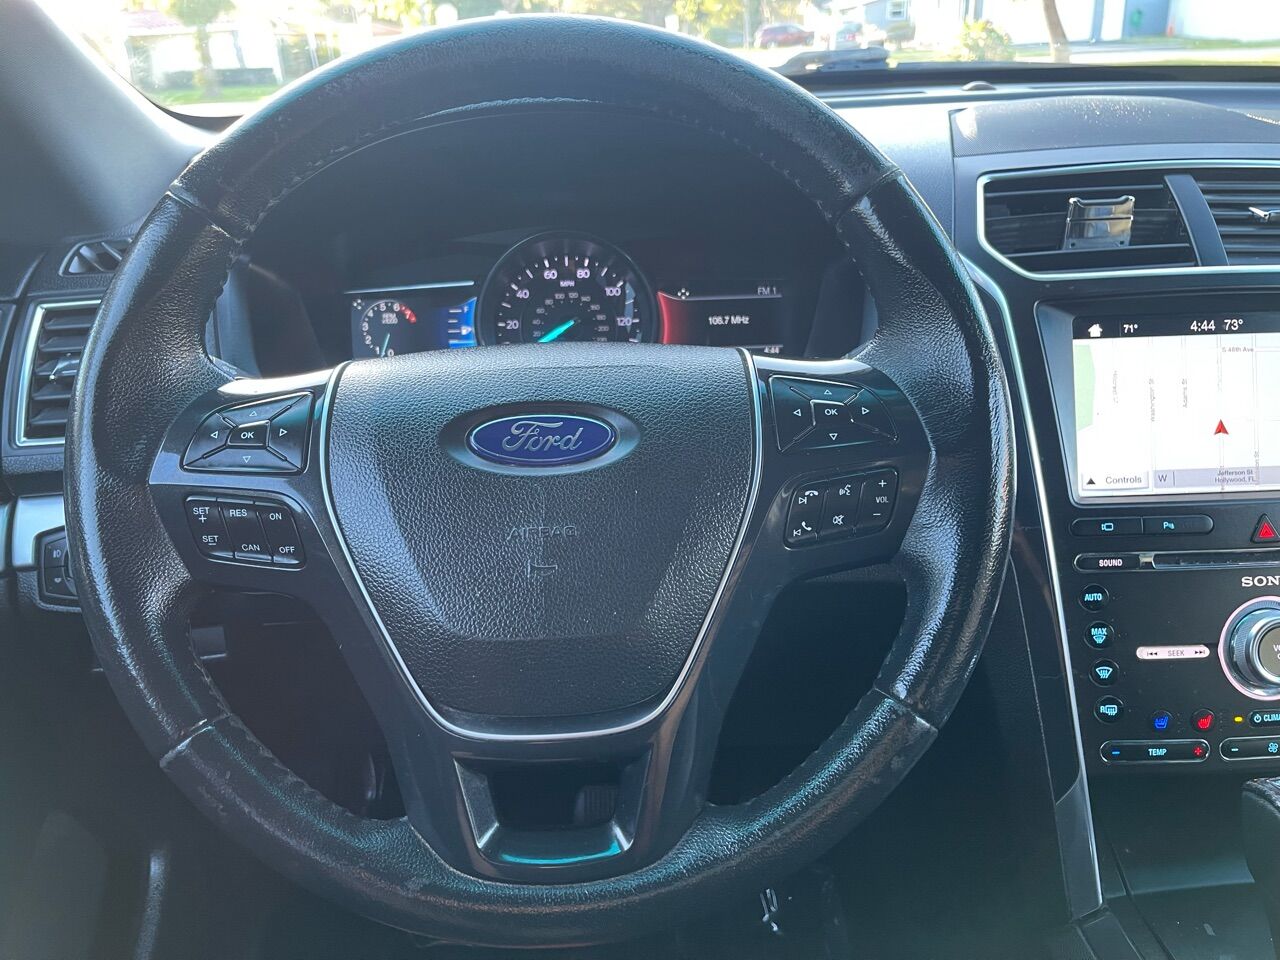 2017 Ford Explorer SUV - $14,555